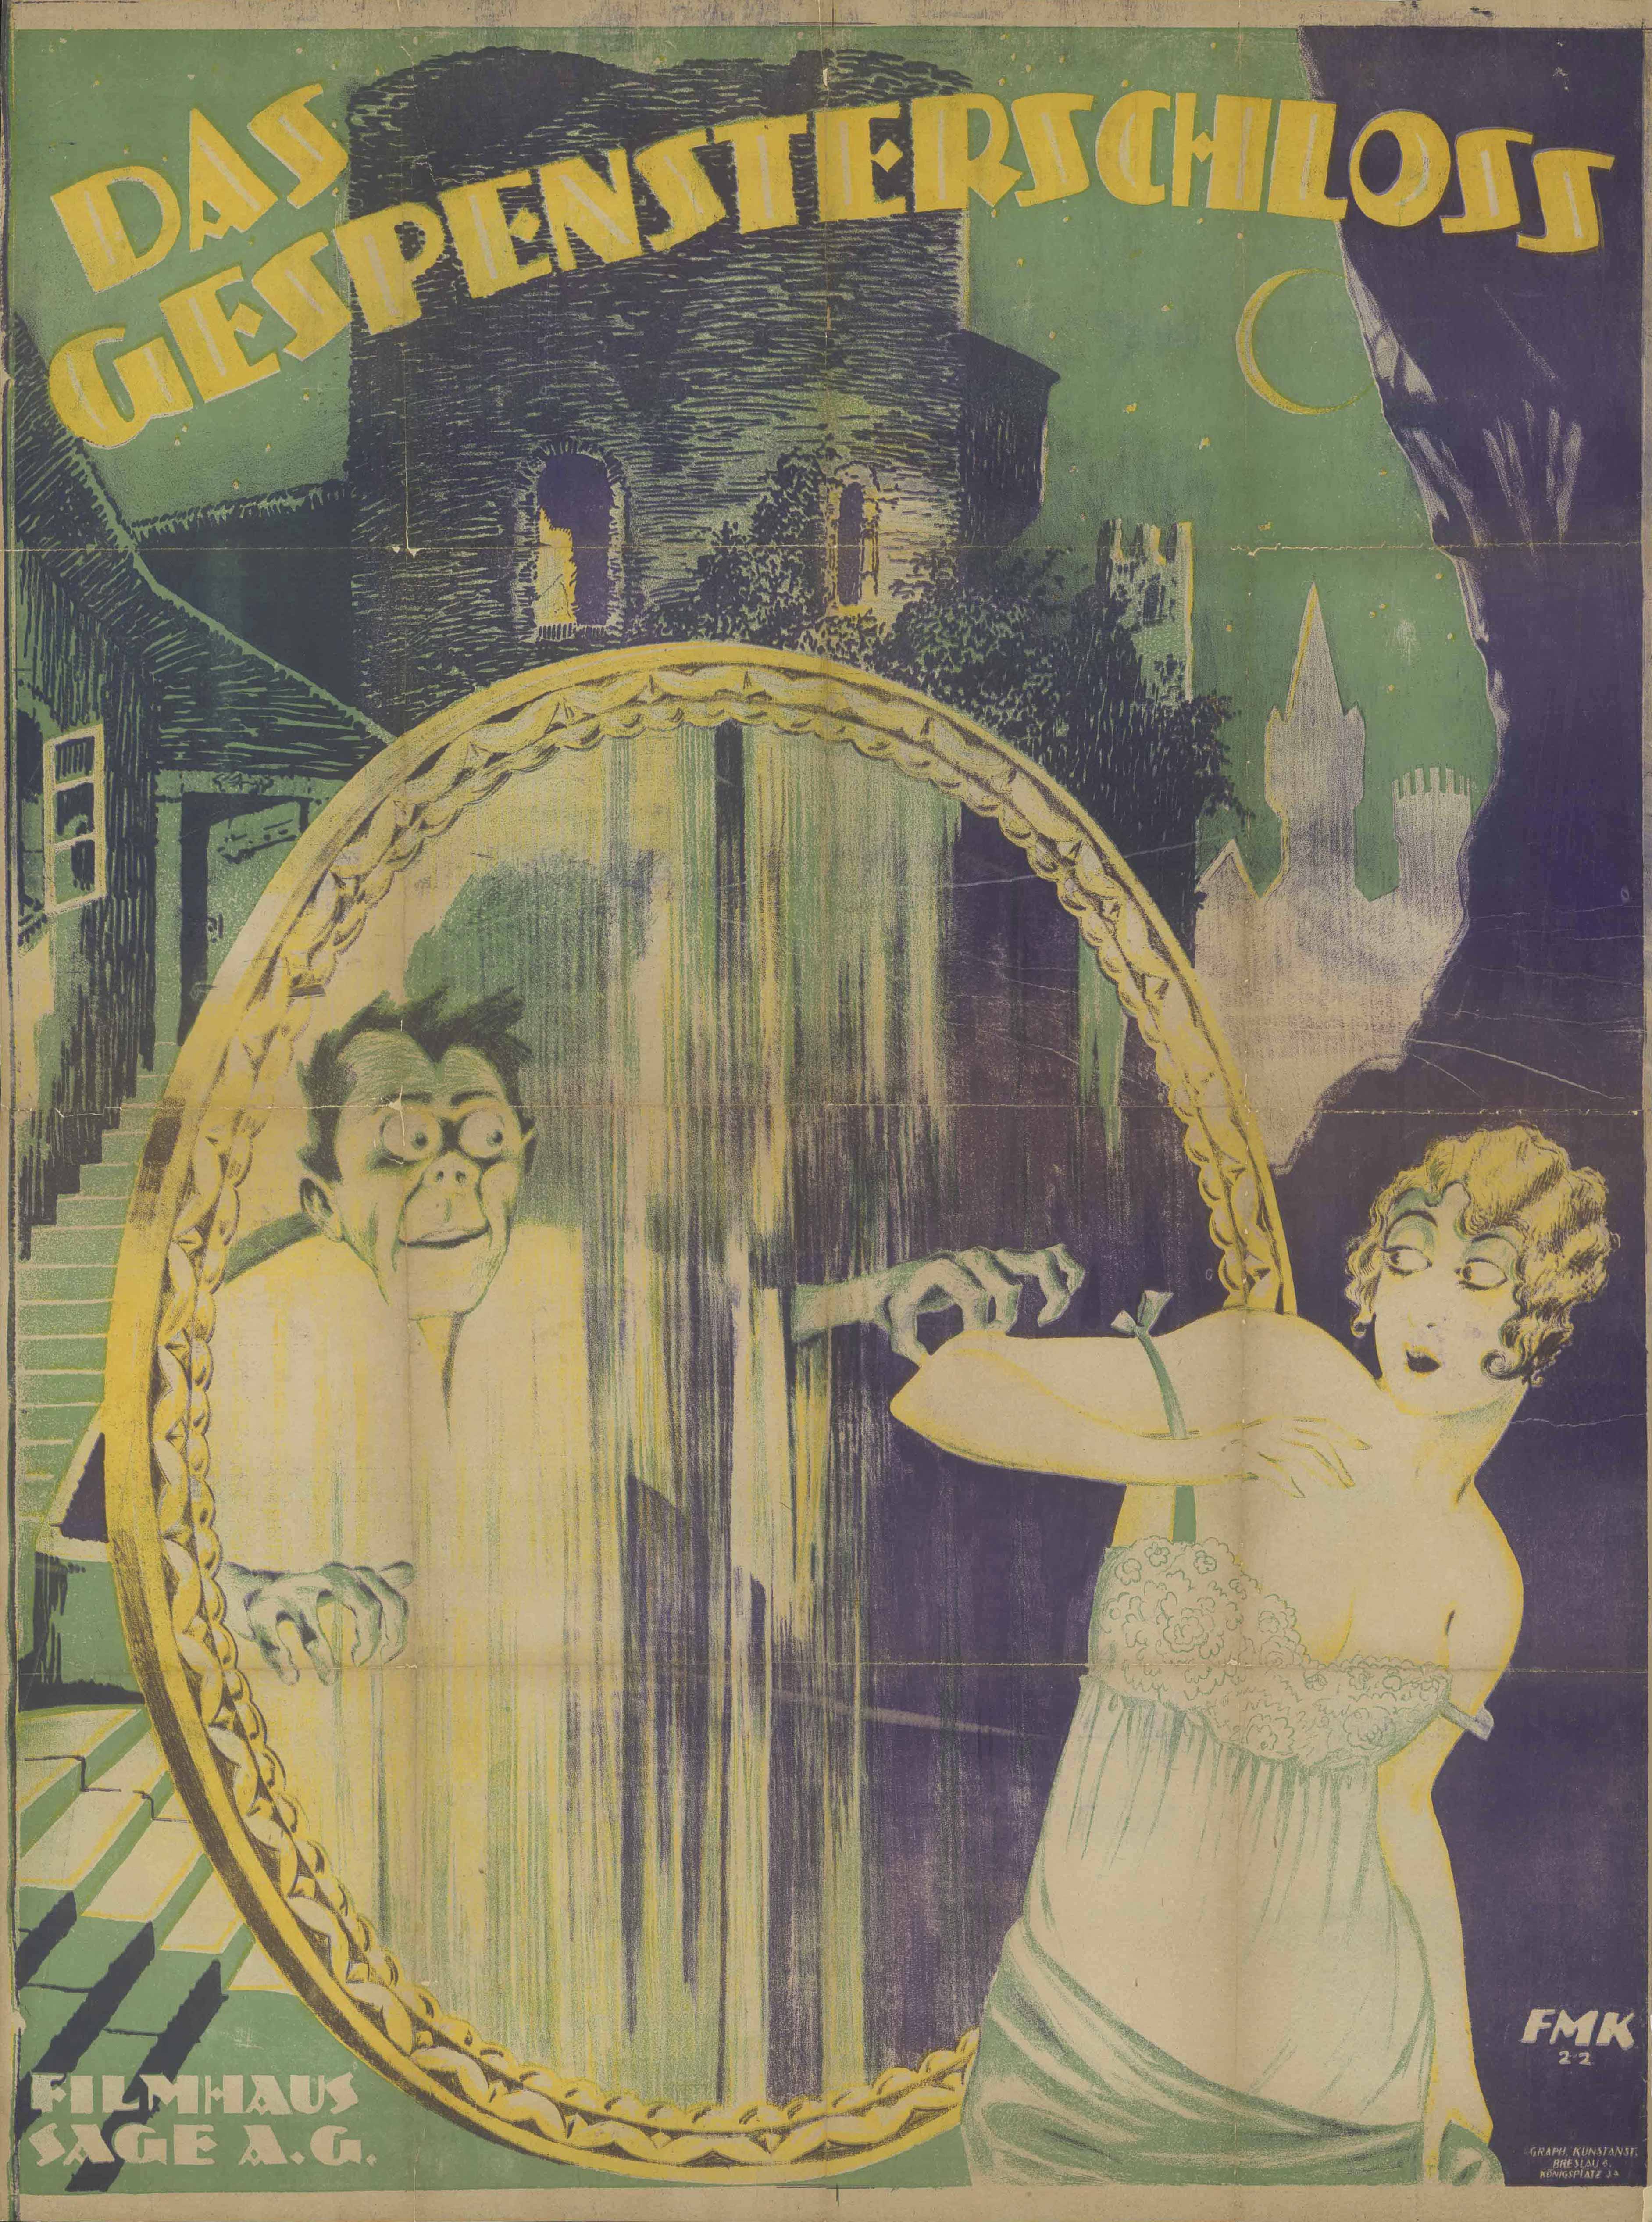 Film poster for Das Gespensterschloss, Germany 1921/1922